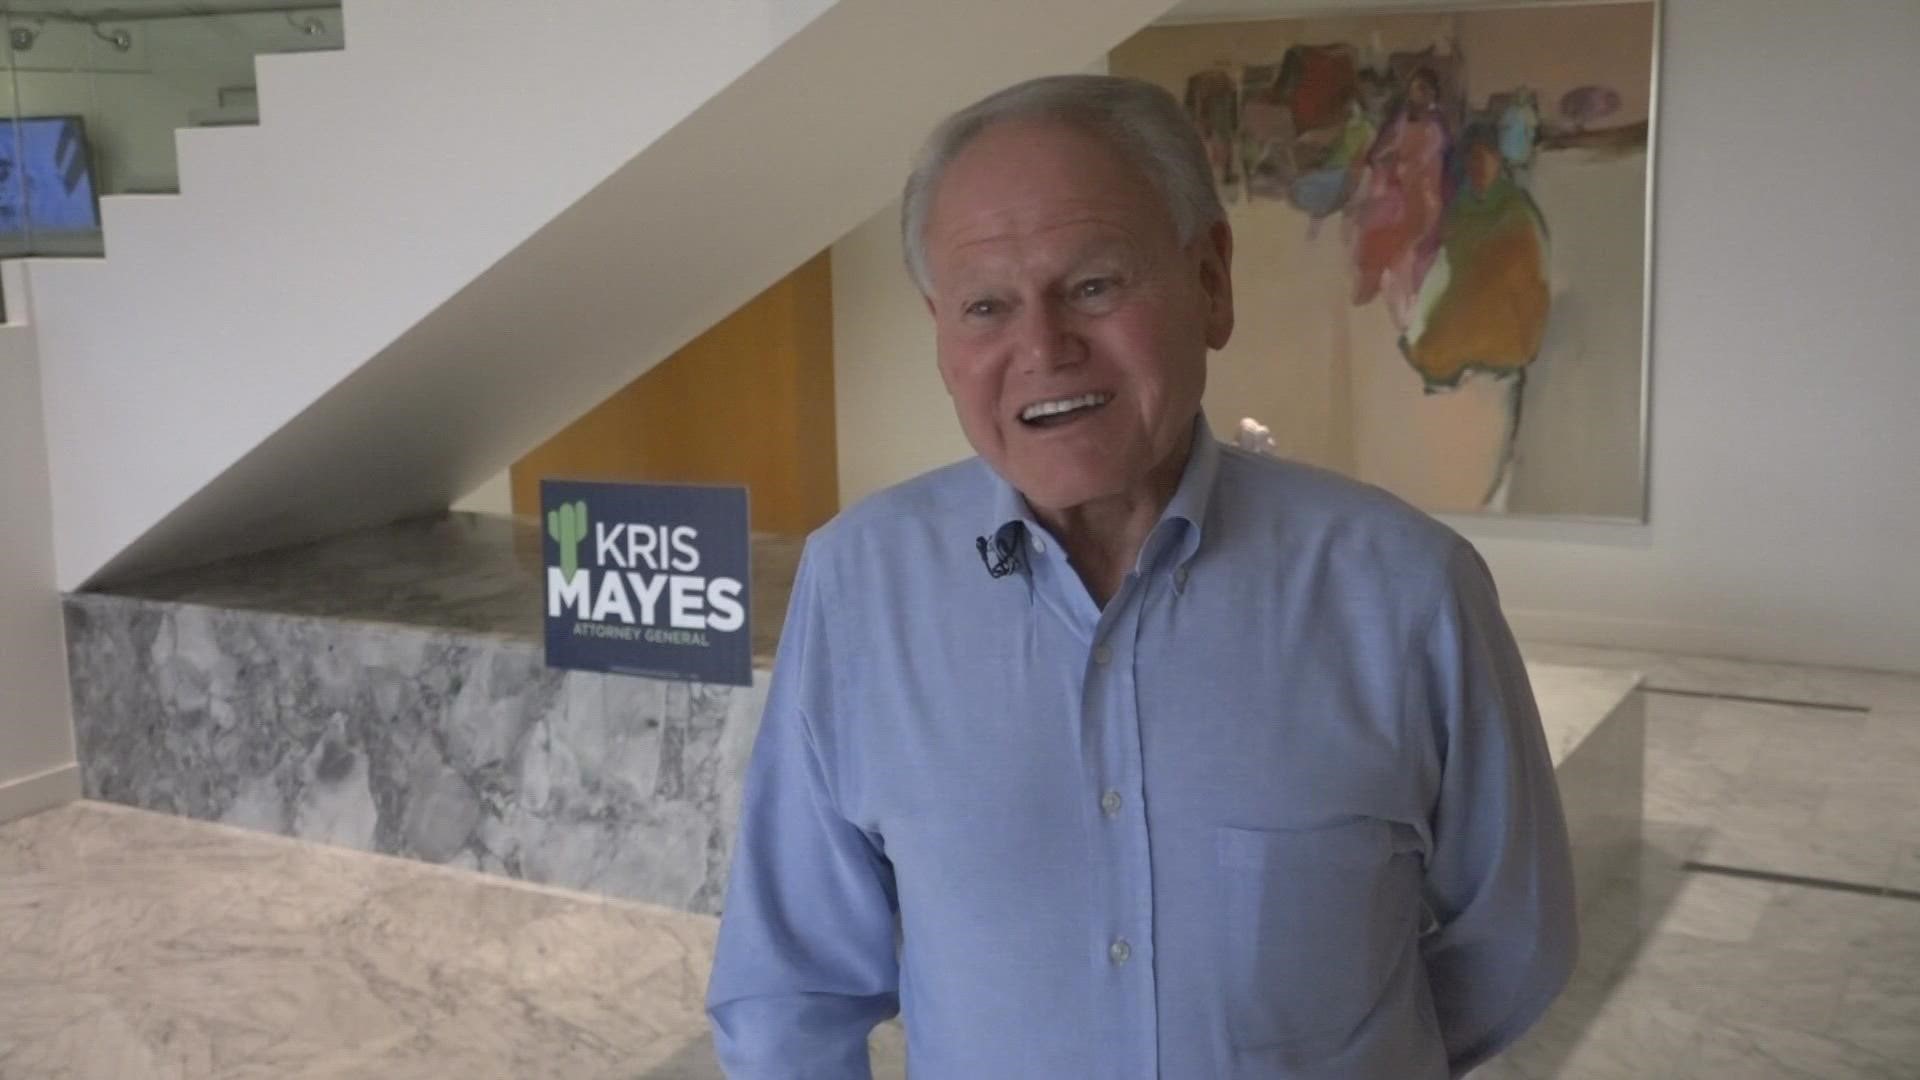 A bi-partisan group of military veterans endorses Democrat Kris Mayes for Arizona Attorney General.